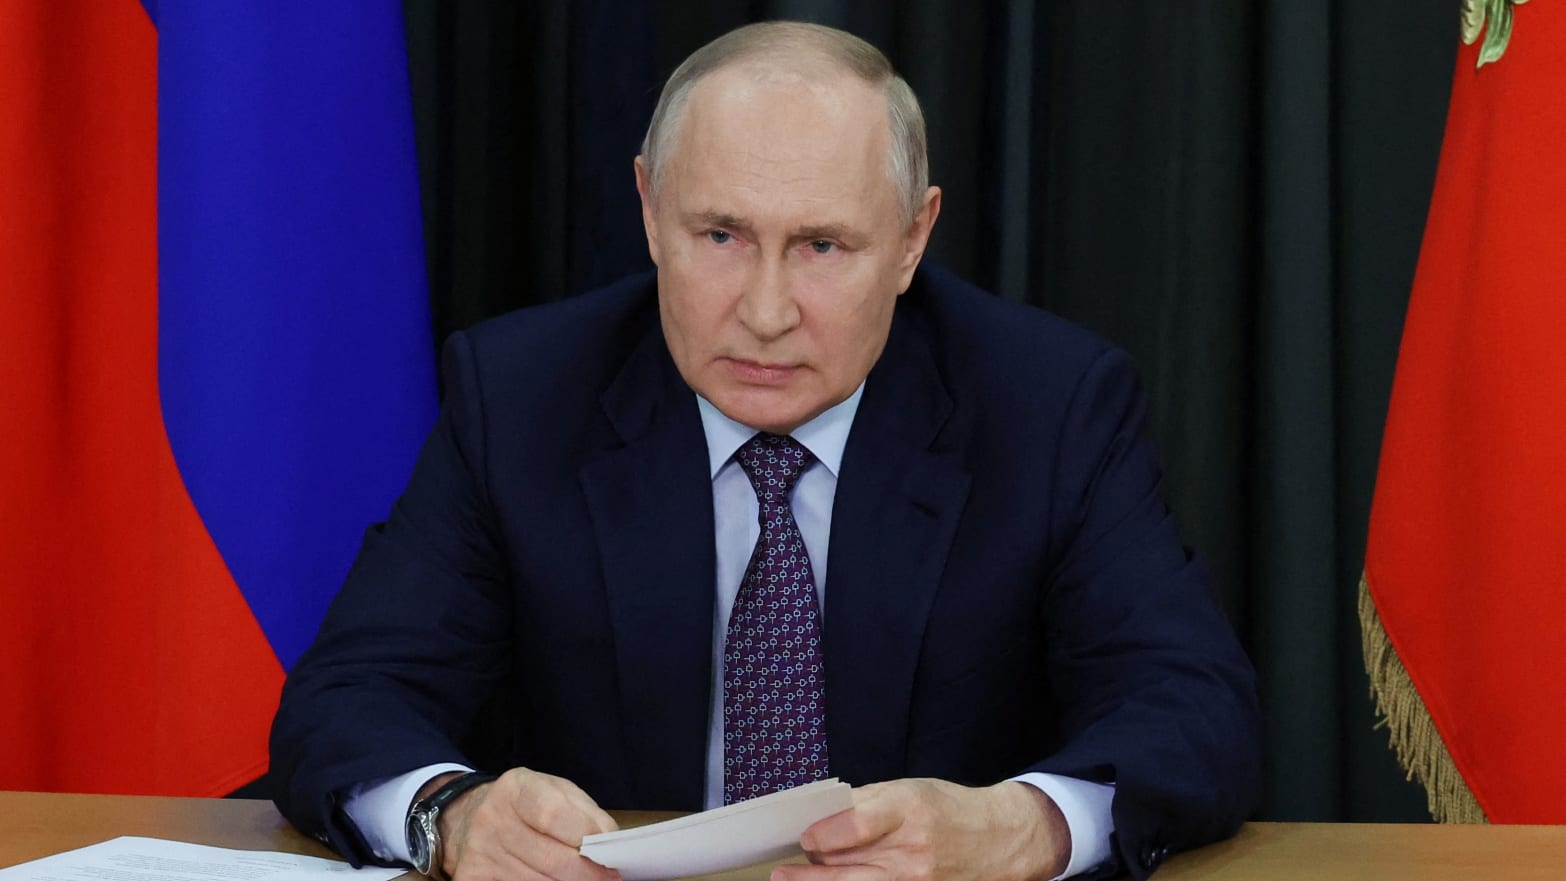 Russian President Vladimir Putin leans on desk at a meeting.